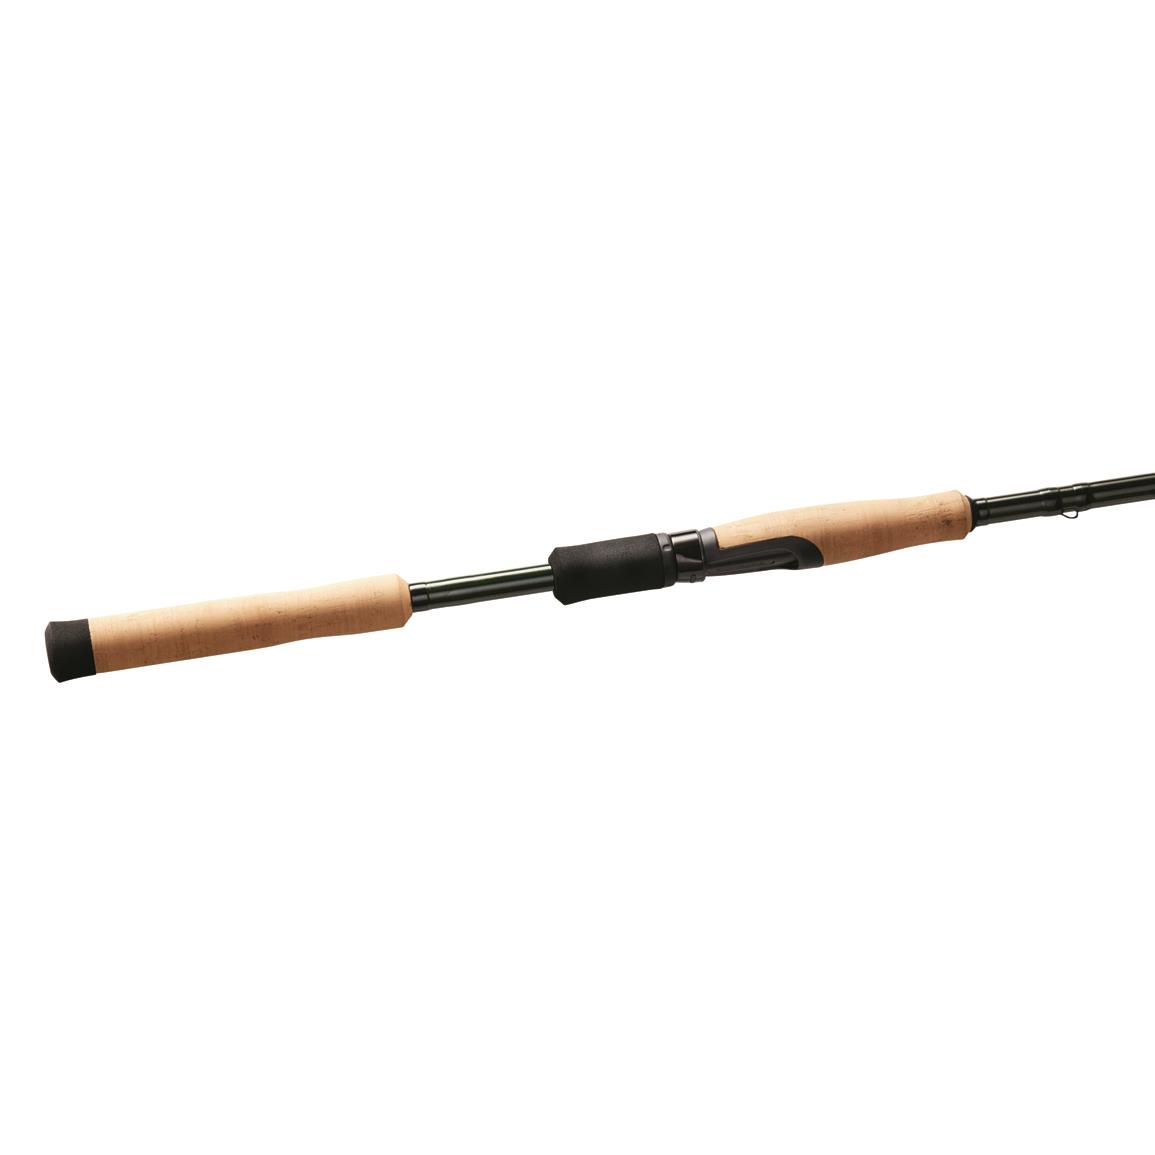 13 Fishing Defy Gold Spinning Rod, 7'2 Length, Medium Light, Fast -  729859, Spinning Rods at Sportsman's Guide